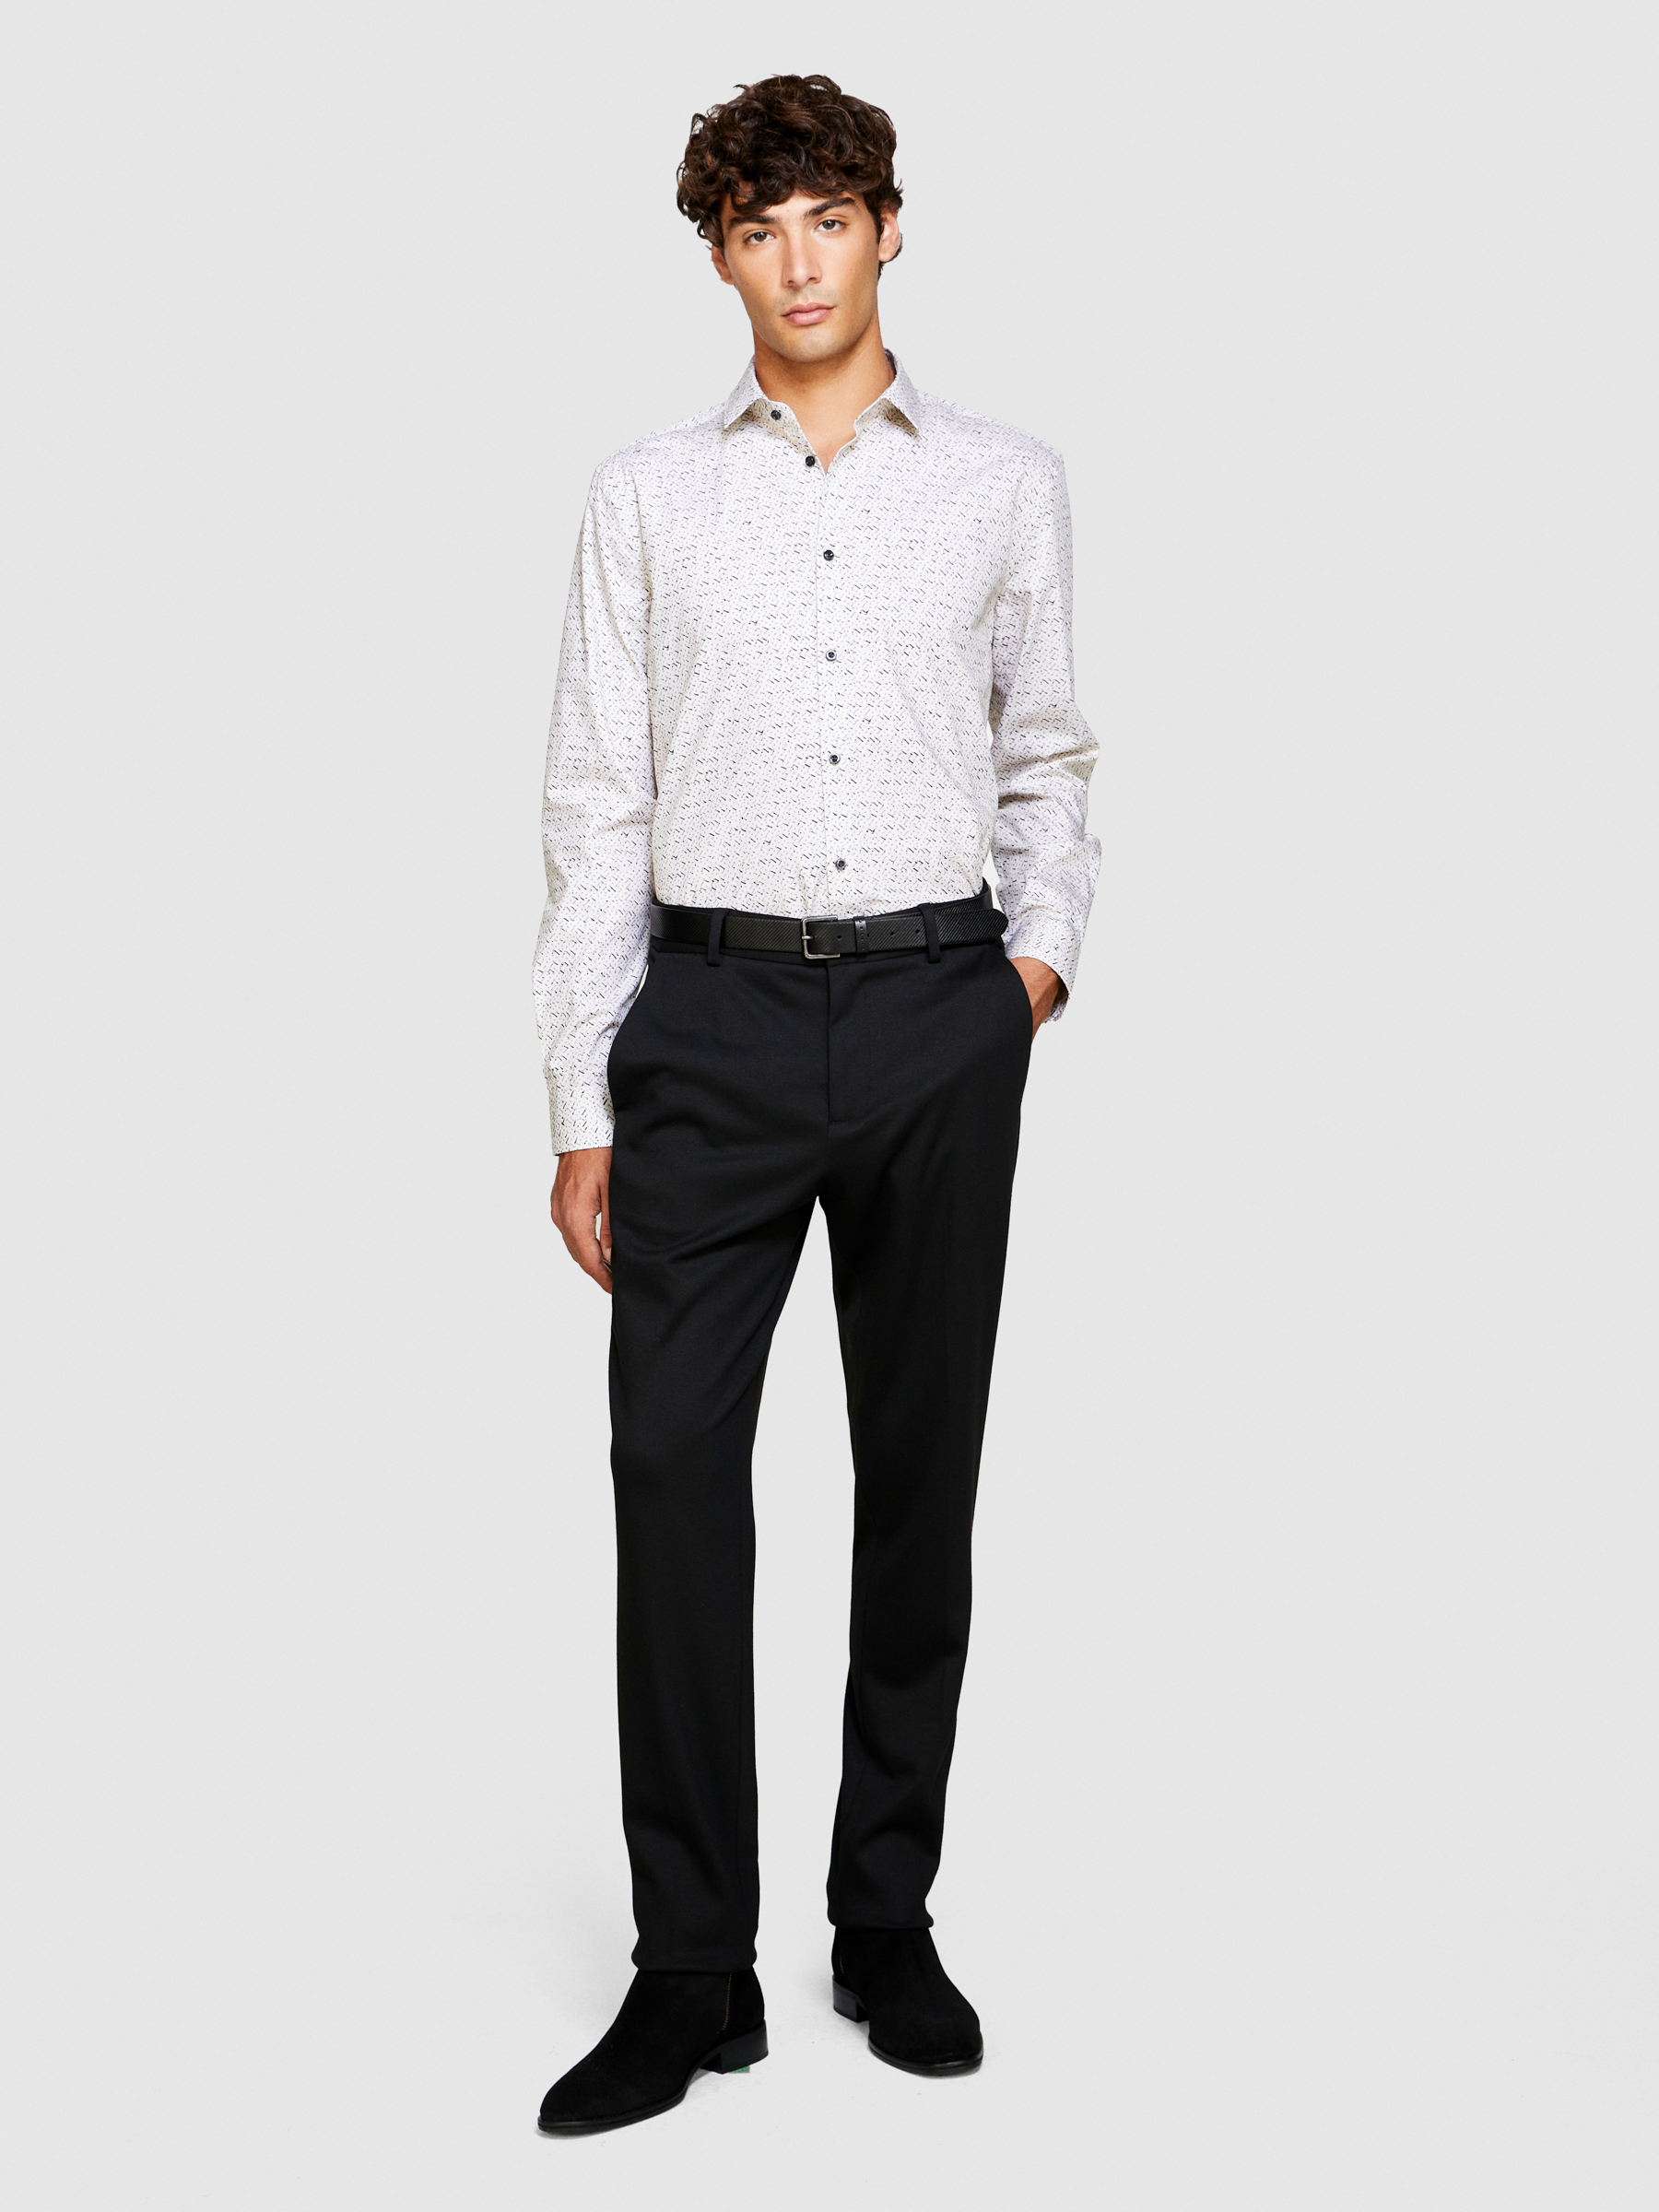 Sisley - Slim Fit Printed Shirt, Man, Creamy White, Size: 40